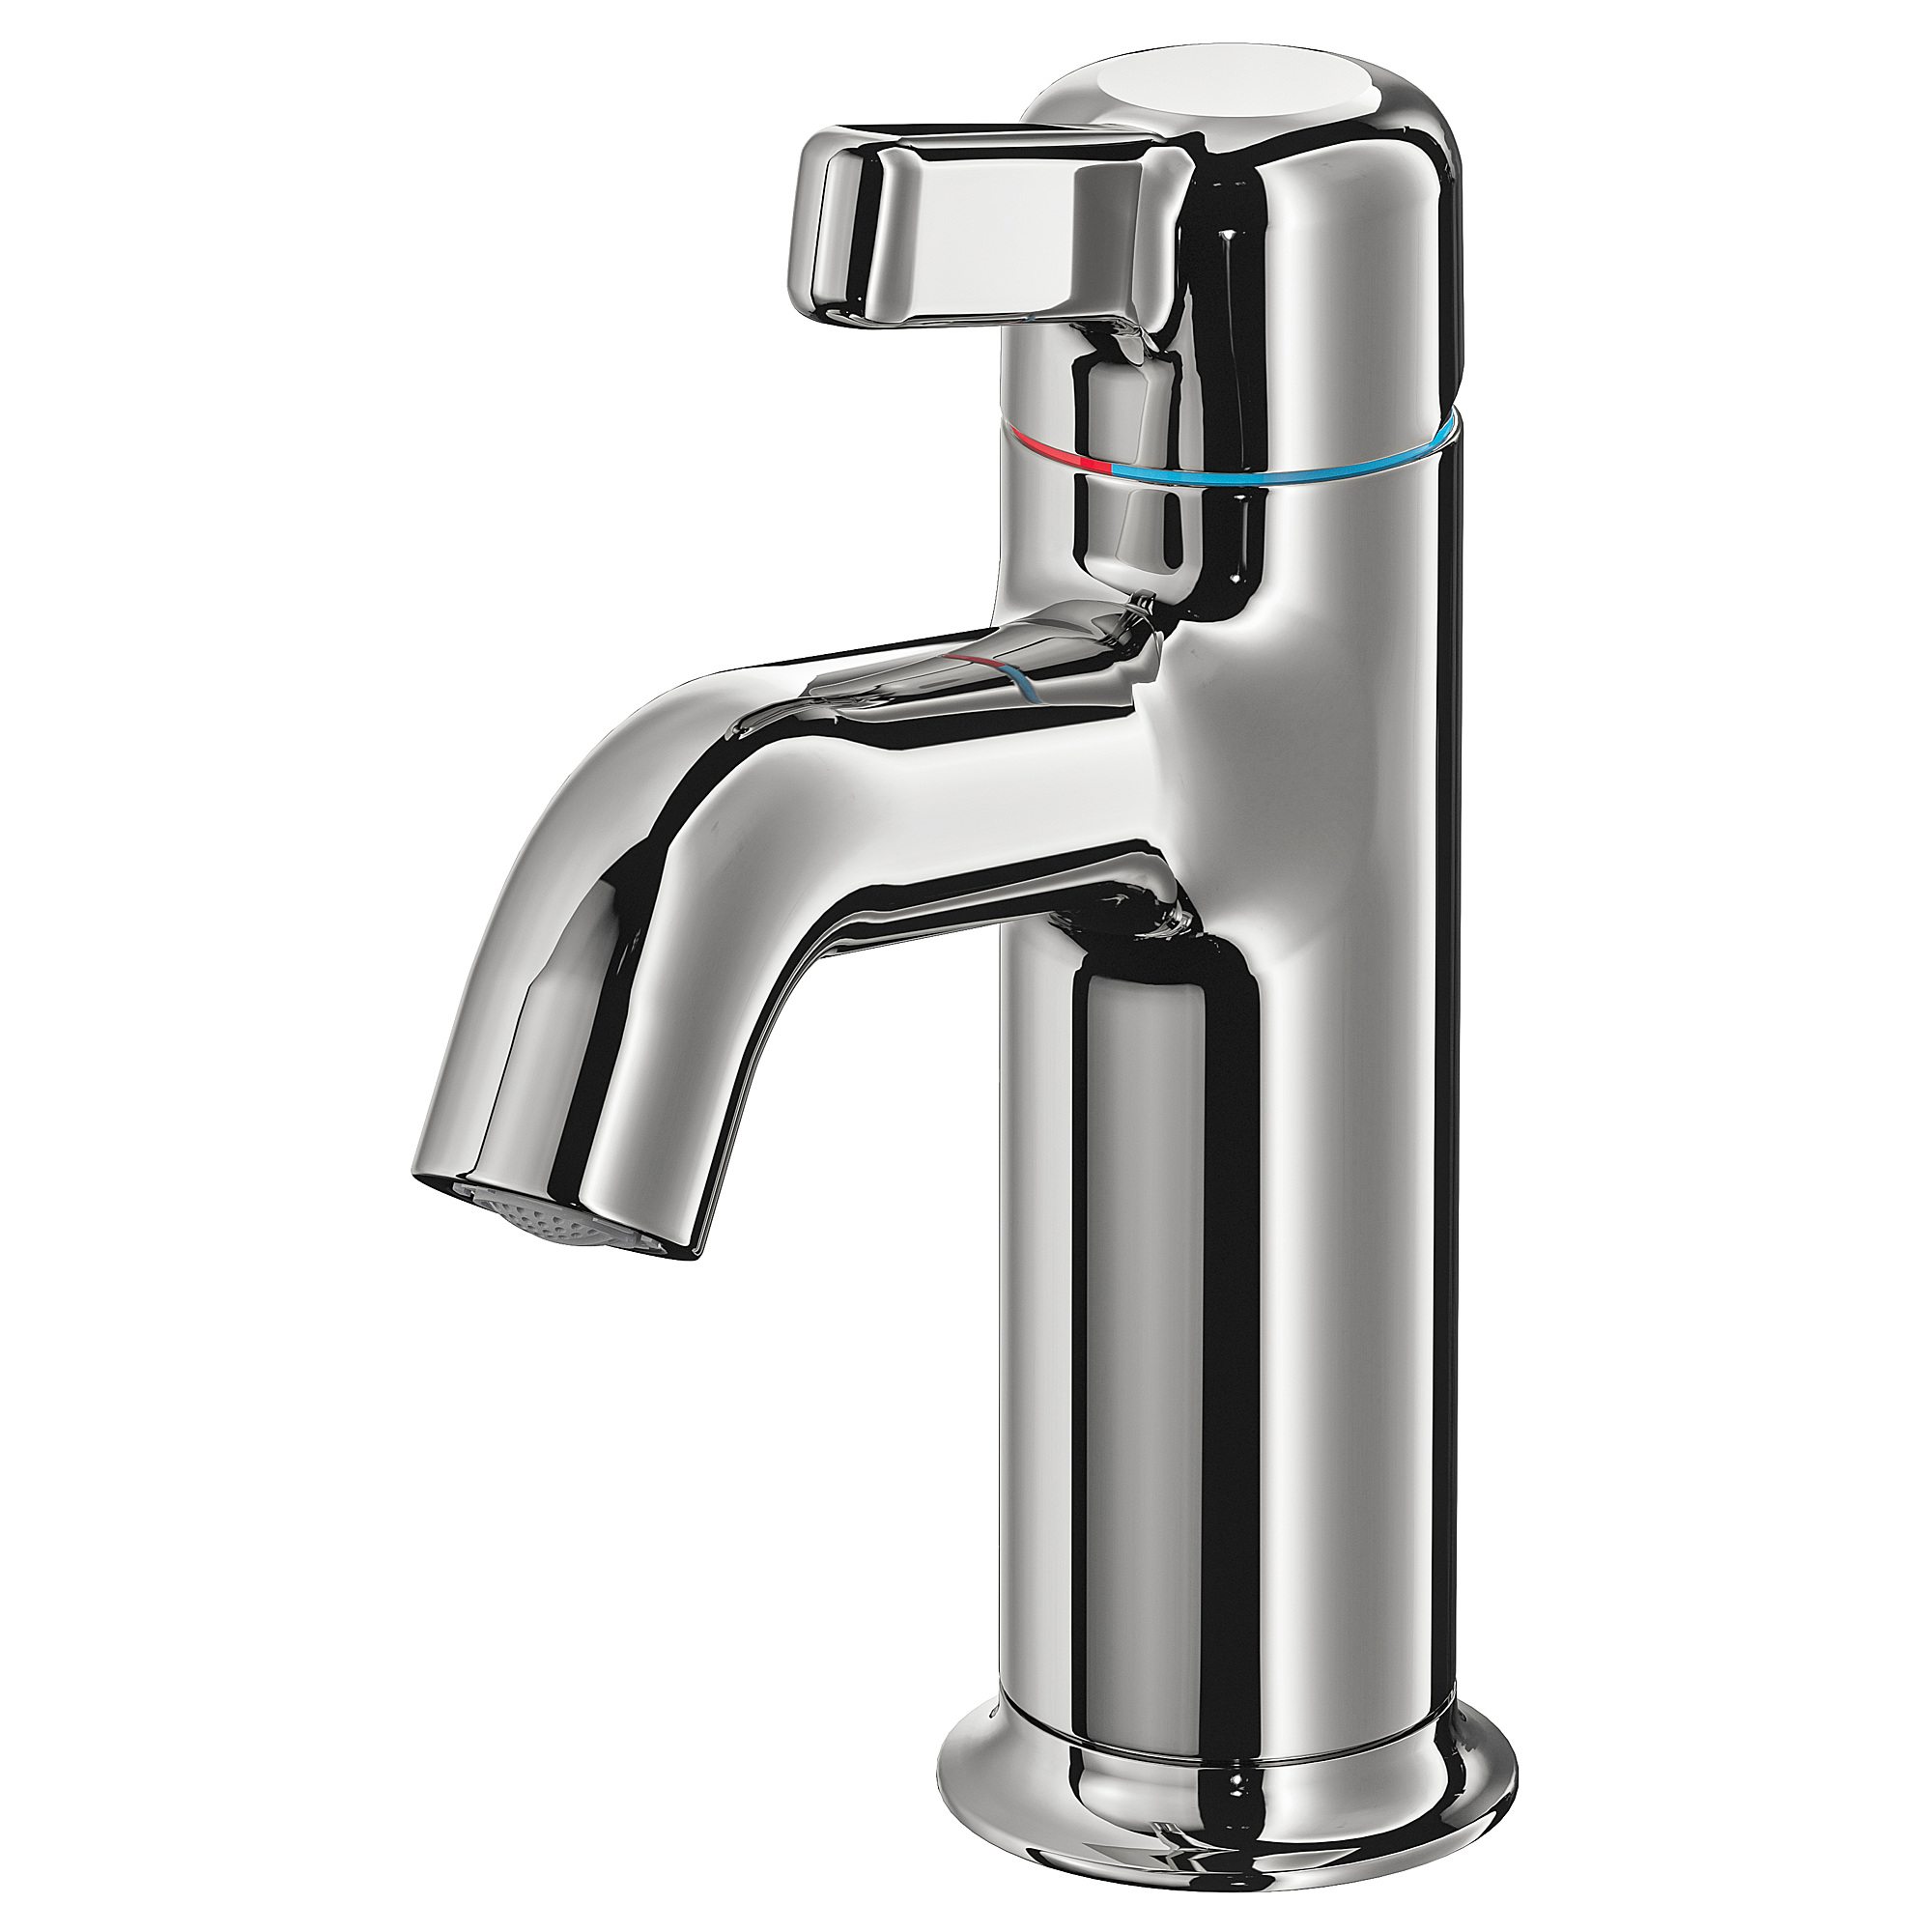 VOXNAN wash-basin mixer tap